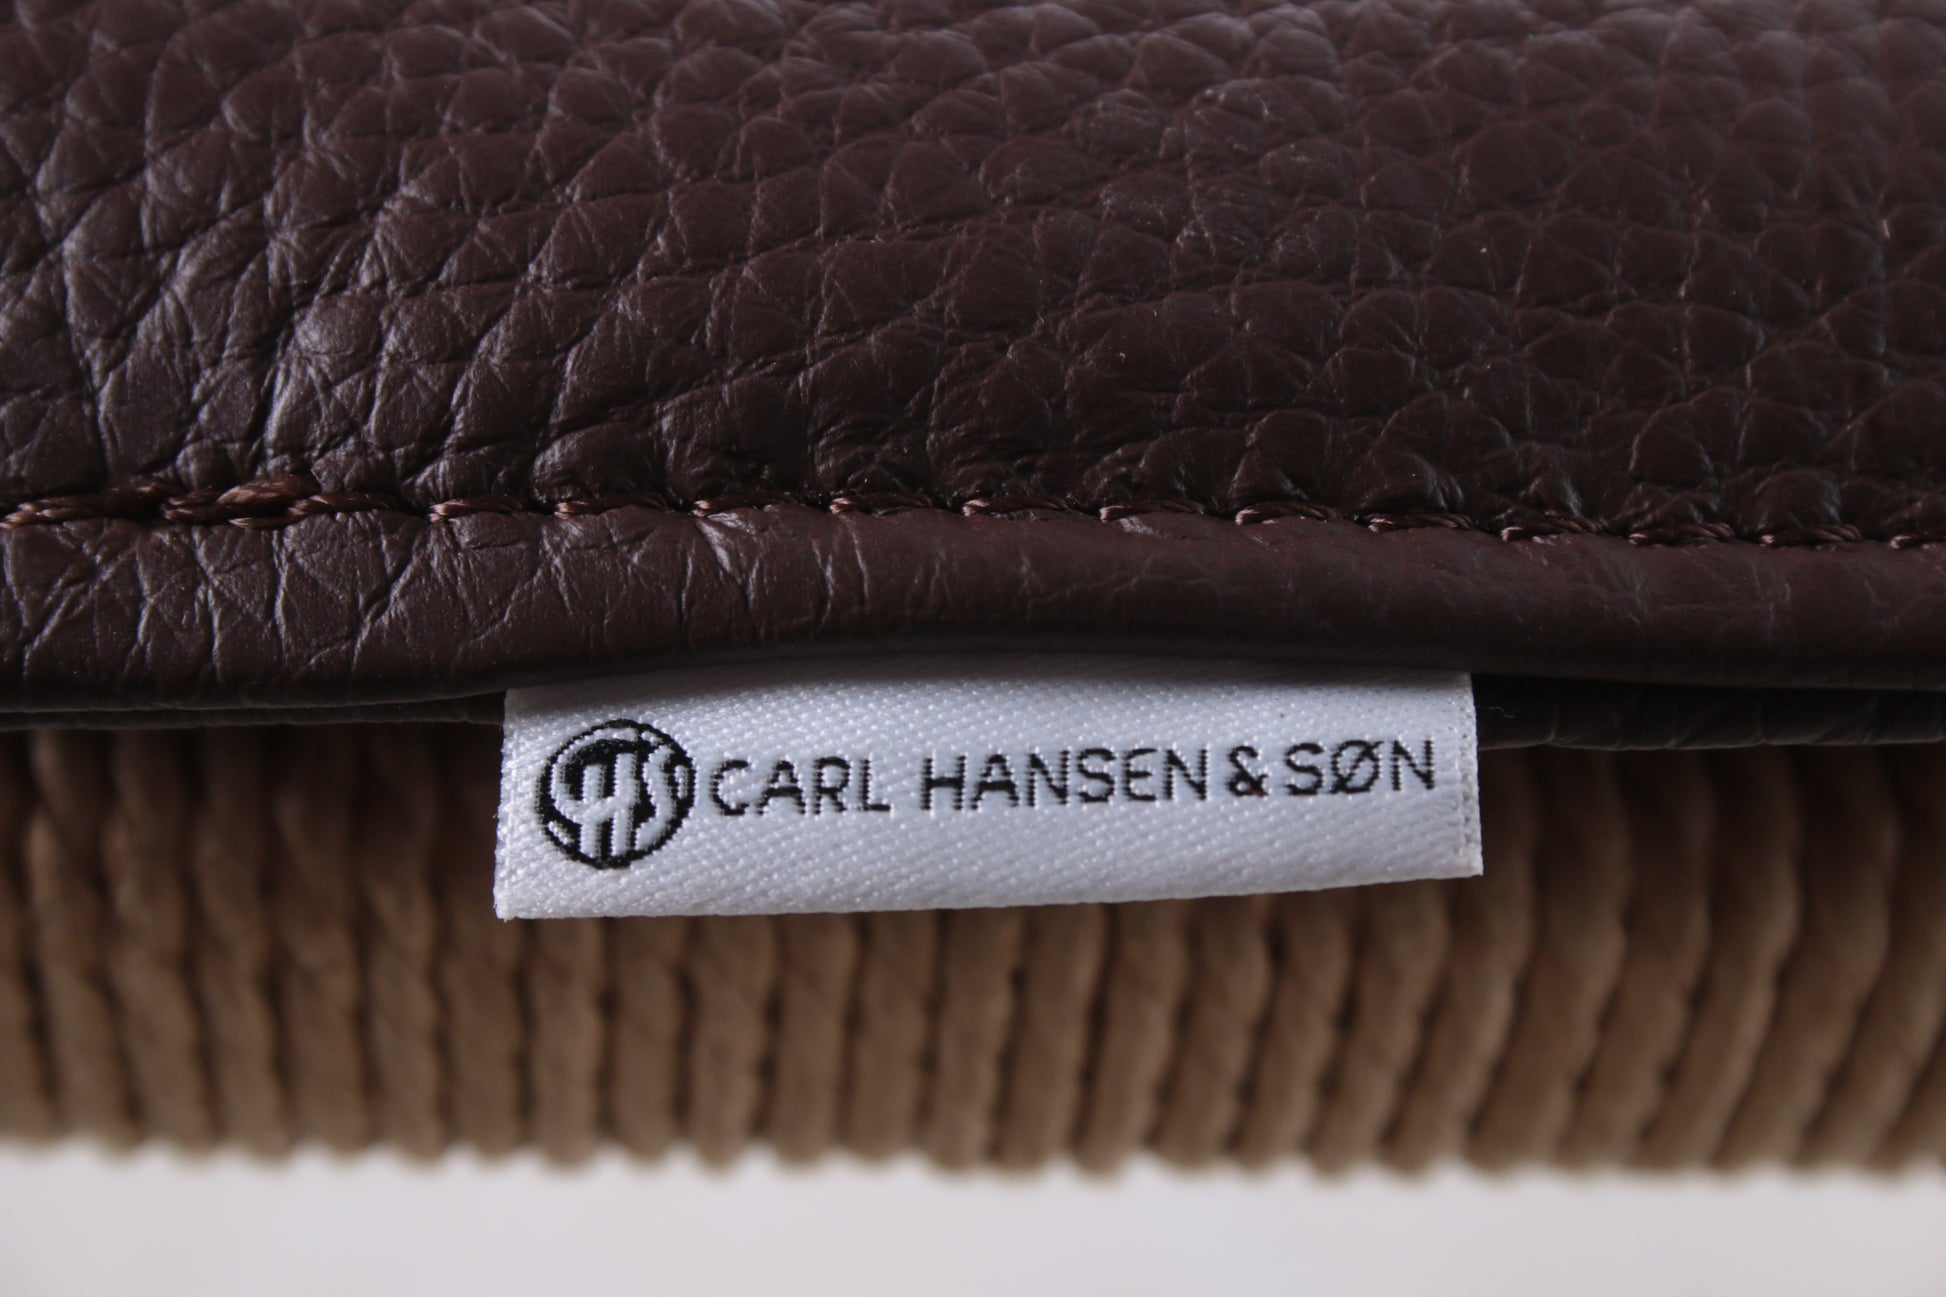 Model CH22 Lounge Chair by Hans J. Wegner for Carl Hansen & Søn detail label kussen